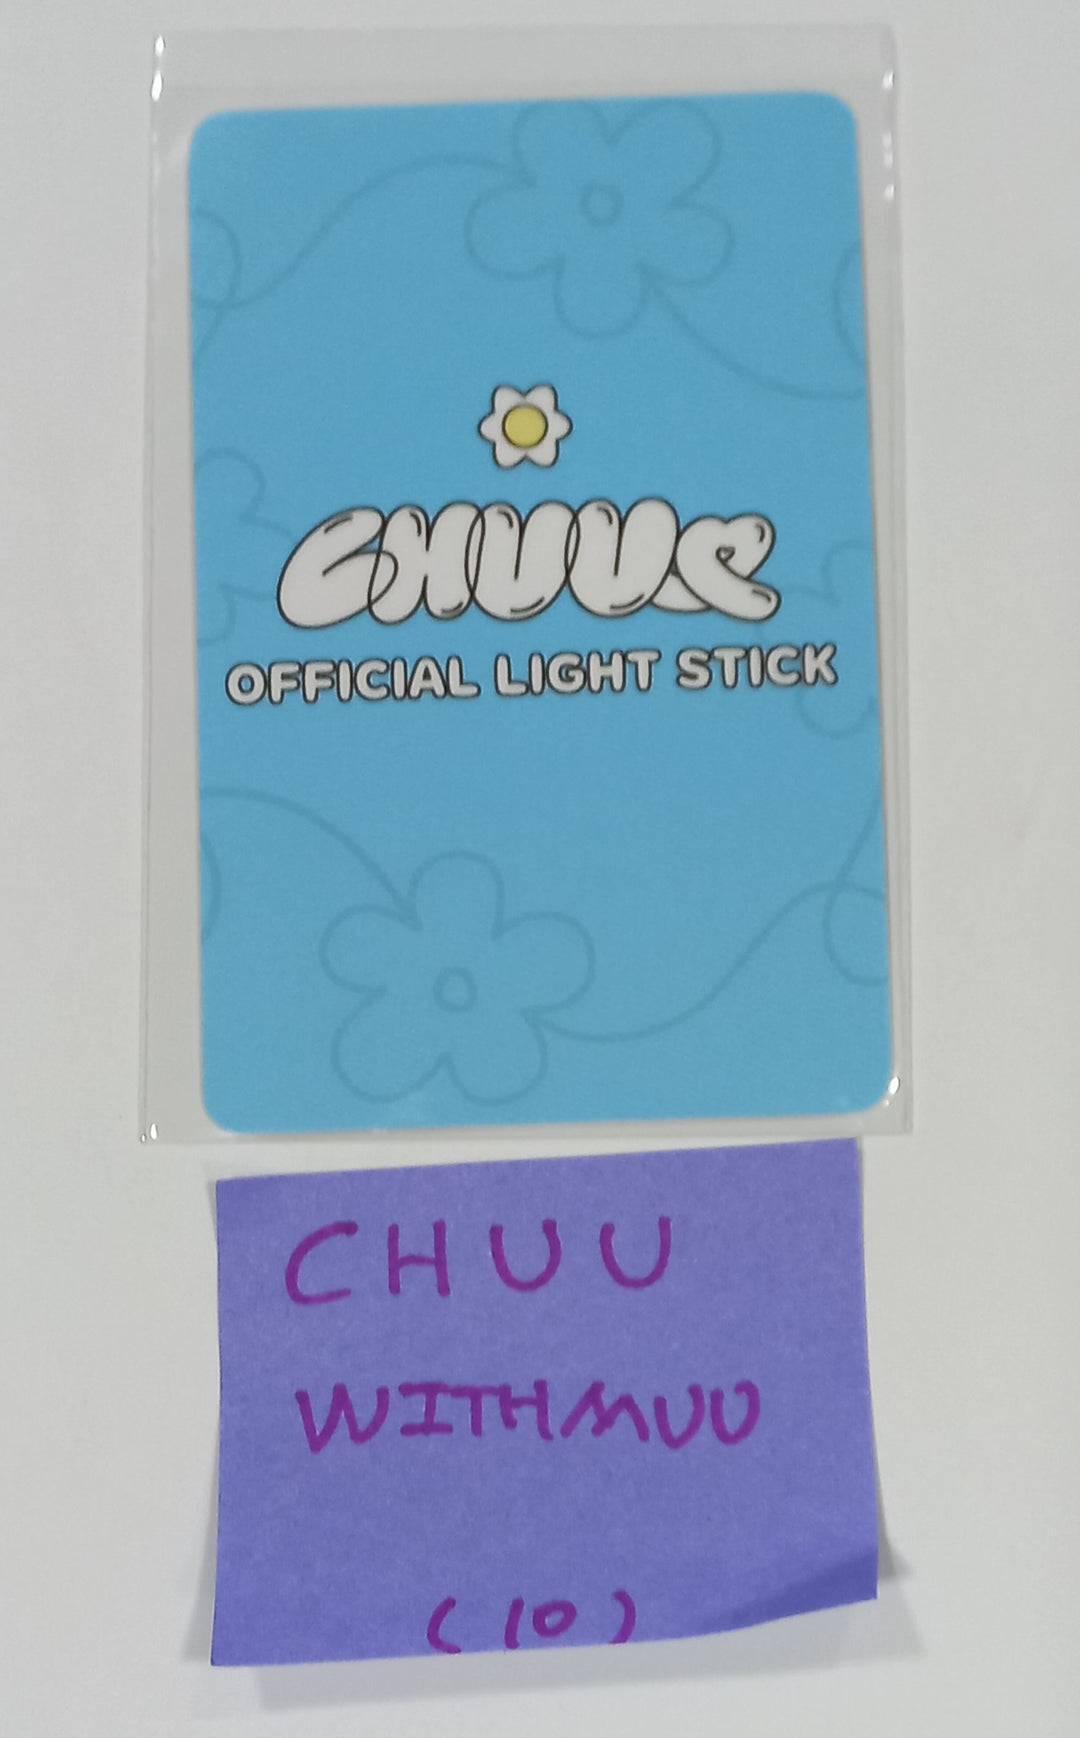 Chuu - 公式ライトスティック Withmuu 予約特典フォトカード [23.08.21]